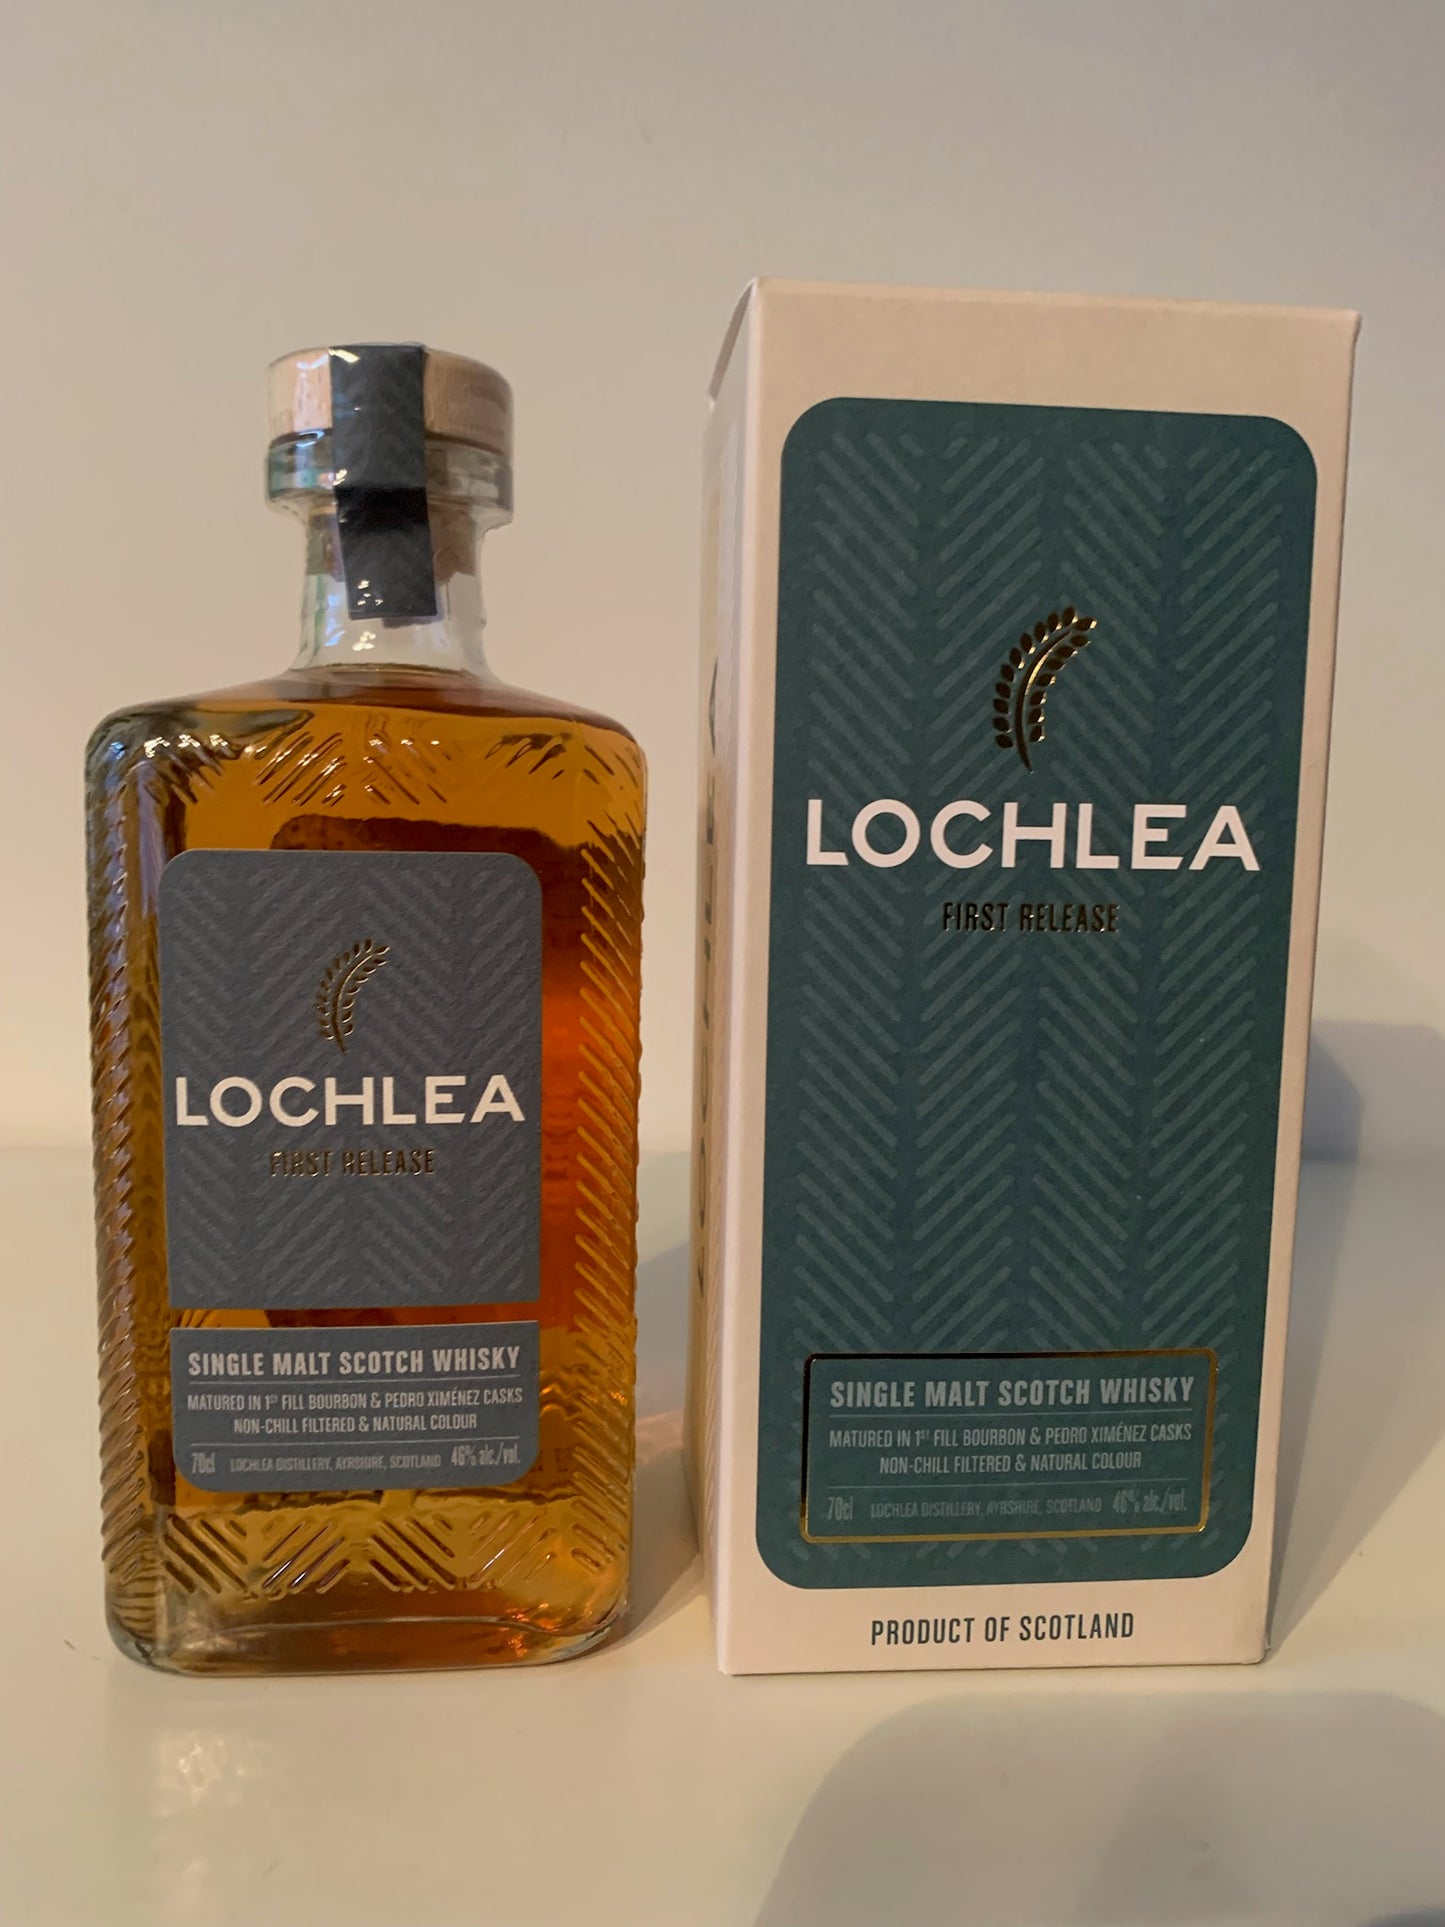 Lochlea Single Malt Scotch Whisky 1st Release 46% / 70 CL.